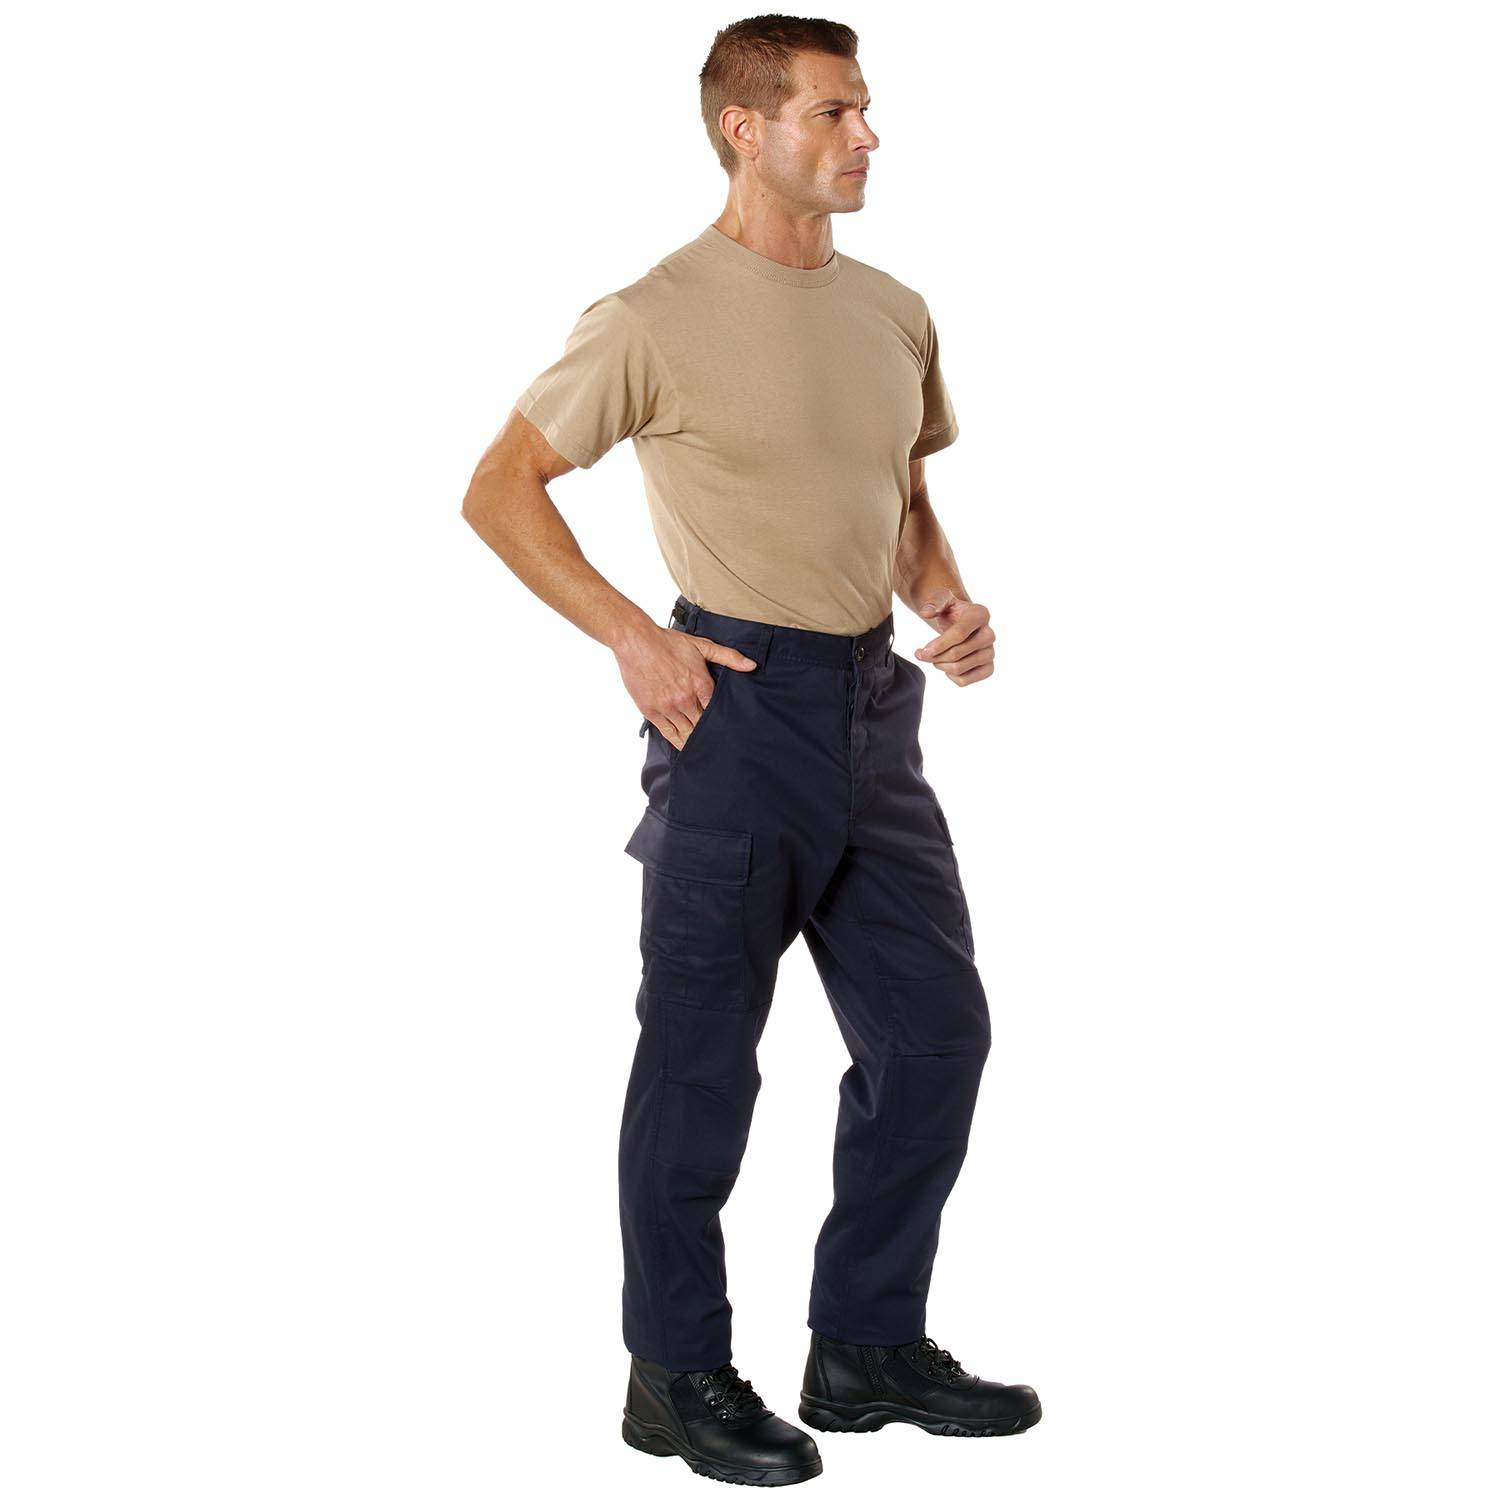 Bravo Pant 2.0: Lightweight & Durable Tactical Pants